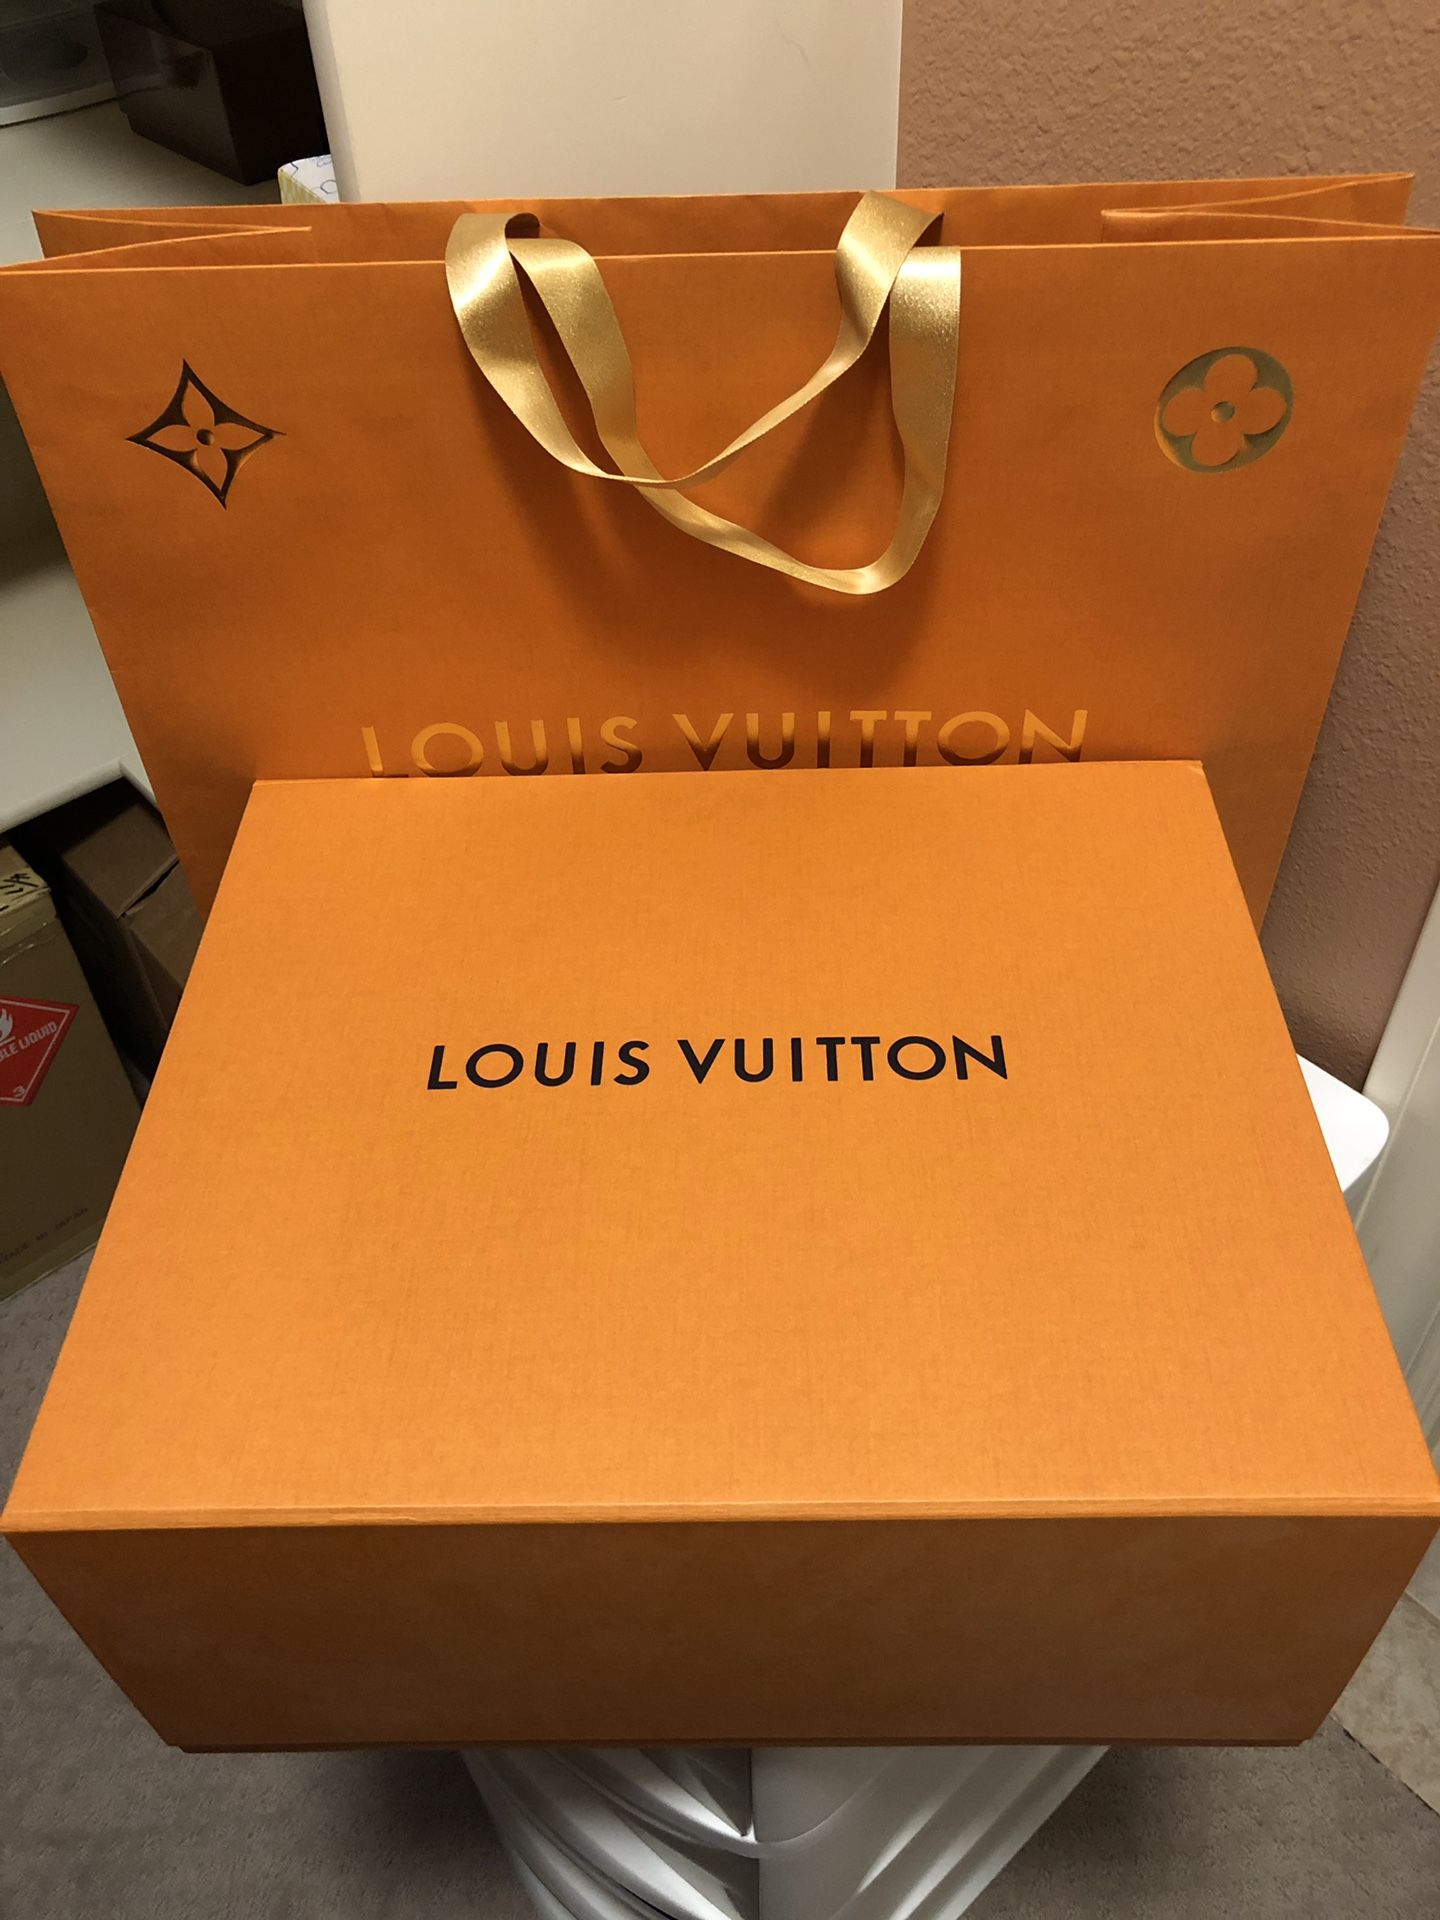 Louis Vuitton box and shopping bag